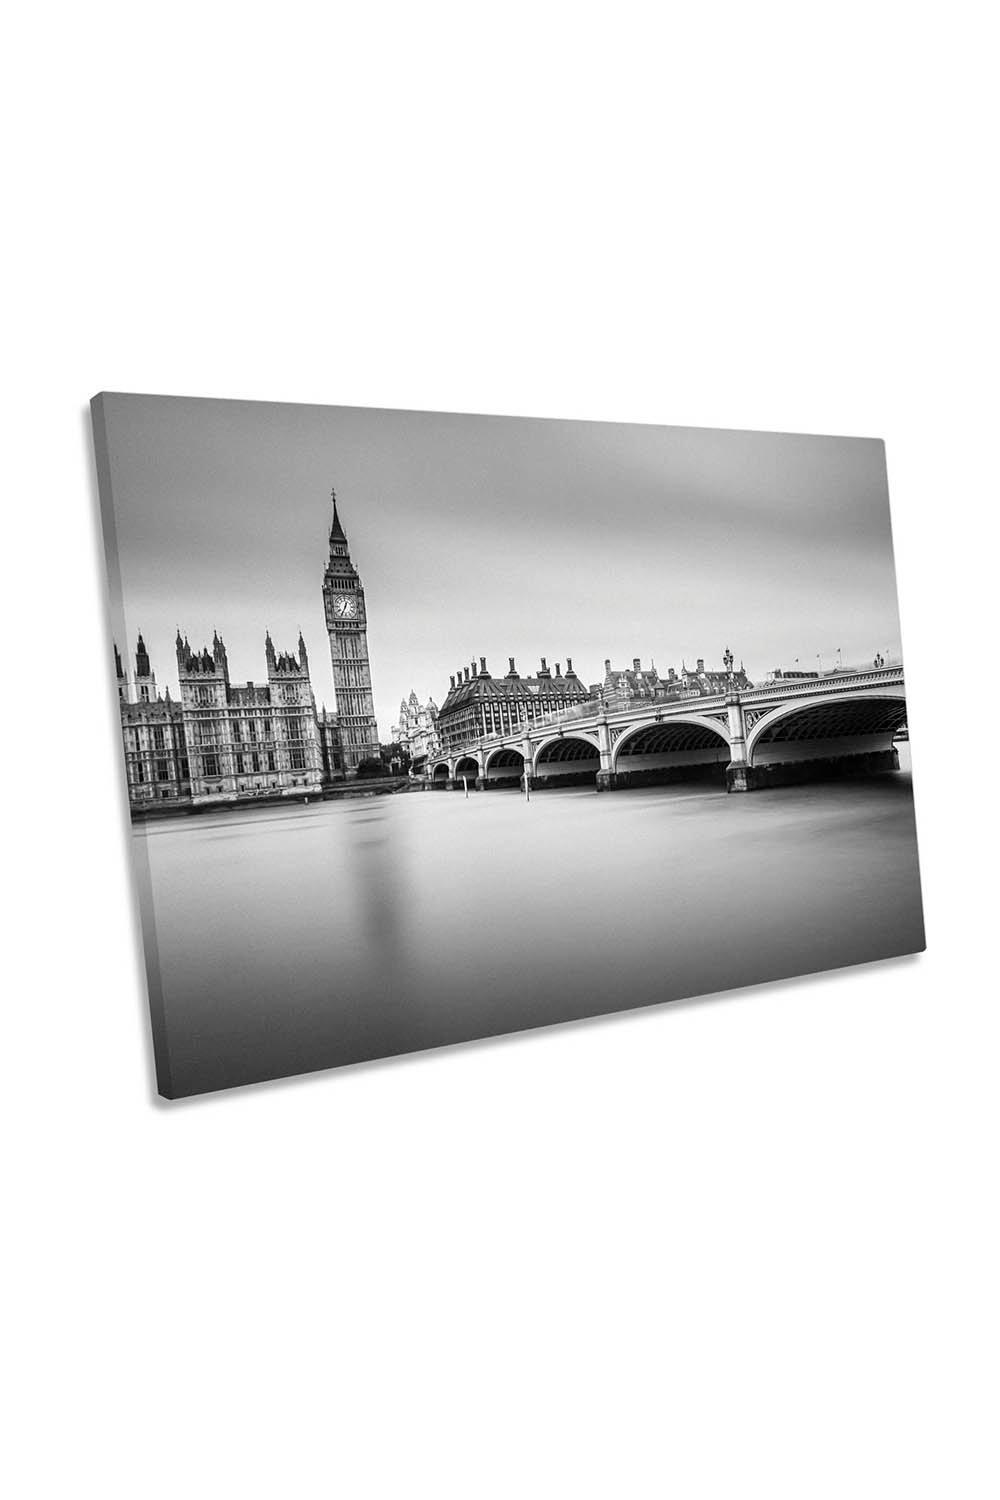 London City Westminster Bridge Canvas Wall Art Picture Print